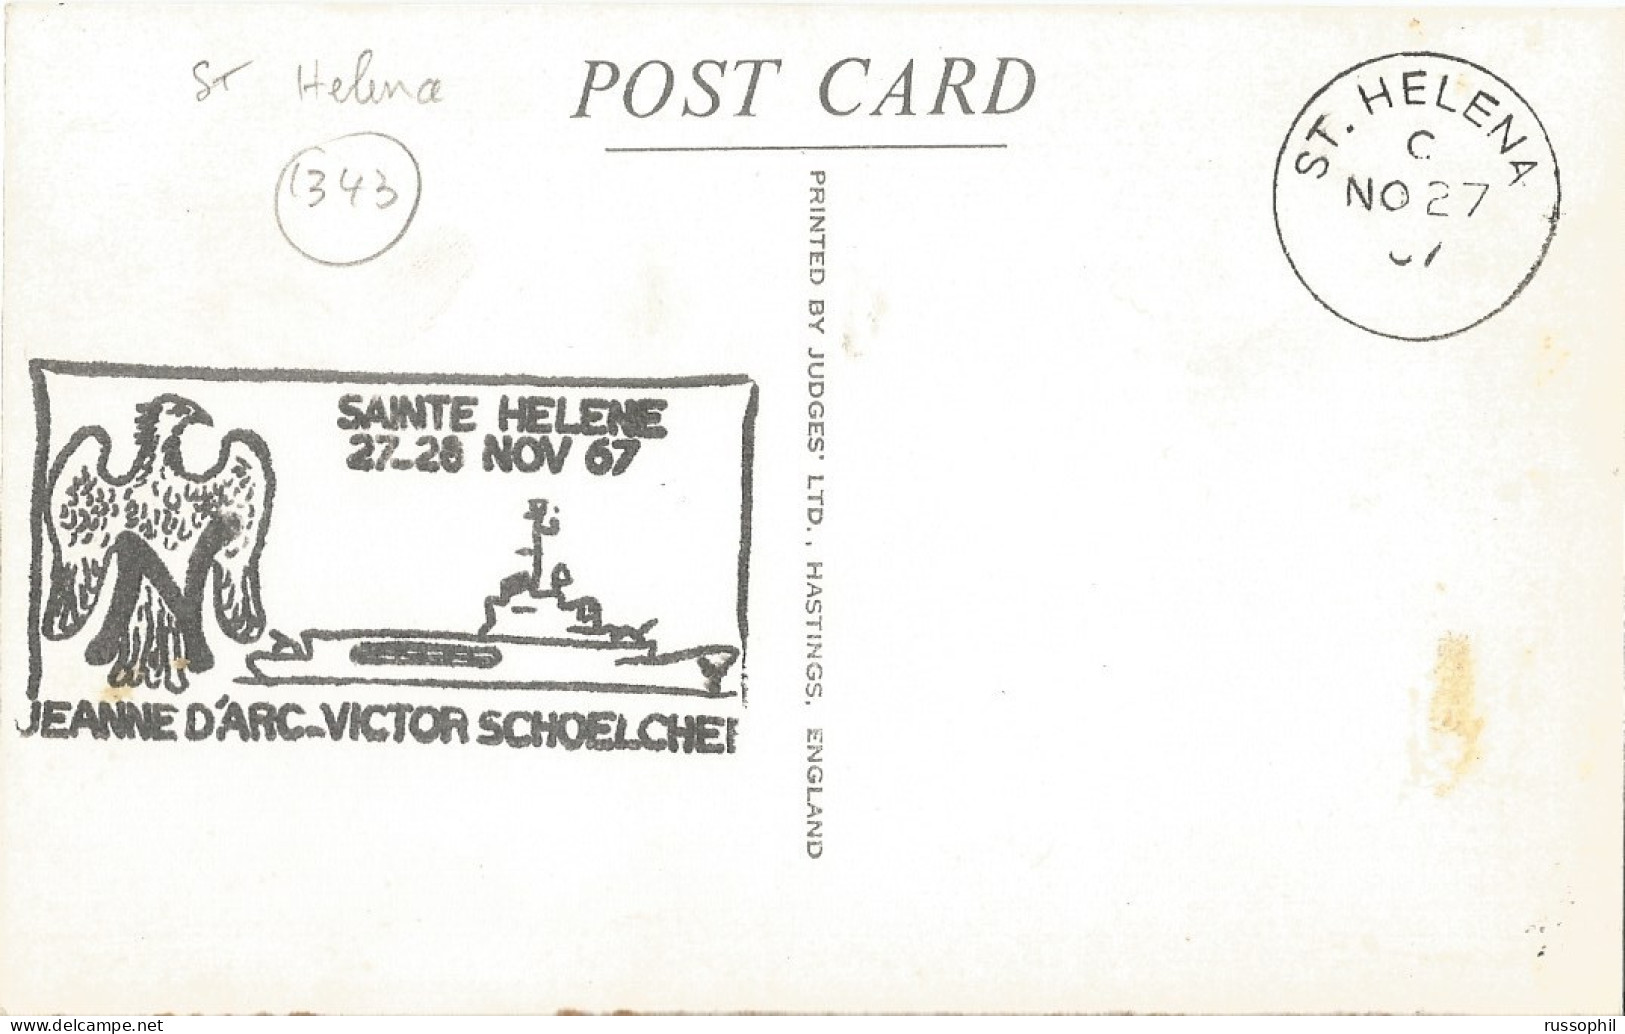 ST HELENA - JACOB'S LADDER, 699 STEPS - PUB. JUDGES LTD, HASTINGSREF REF #2  - FRENCH WAR SHIP " JEANNE D'ARC " - 1967 - Sainte-Hélène